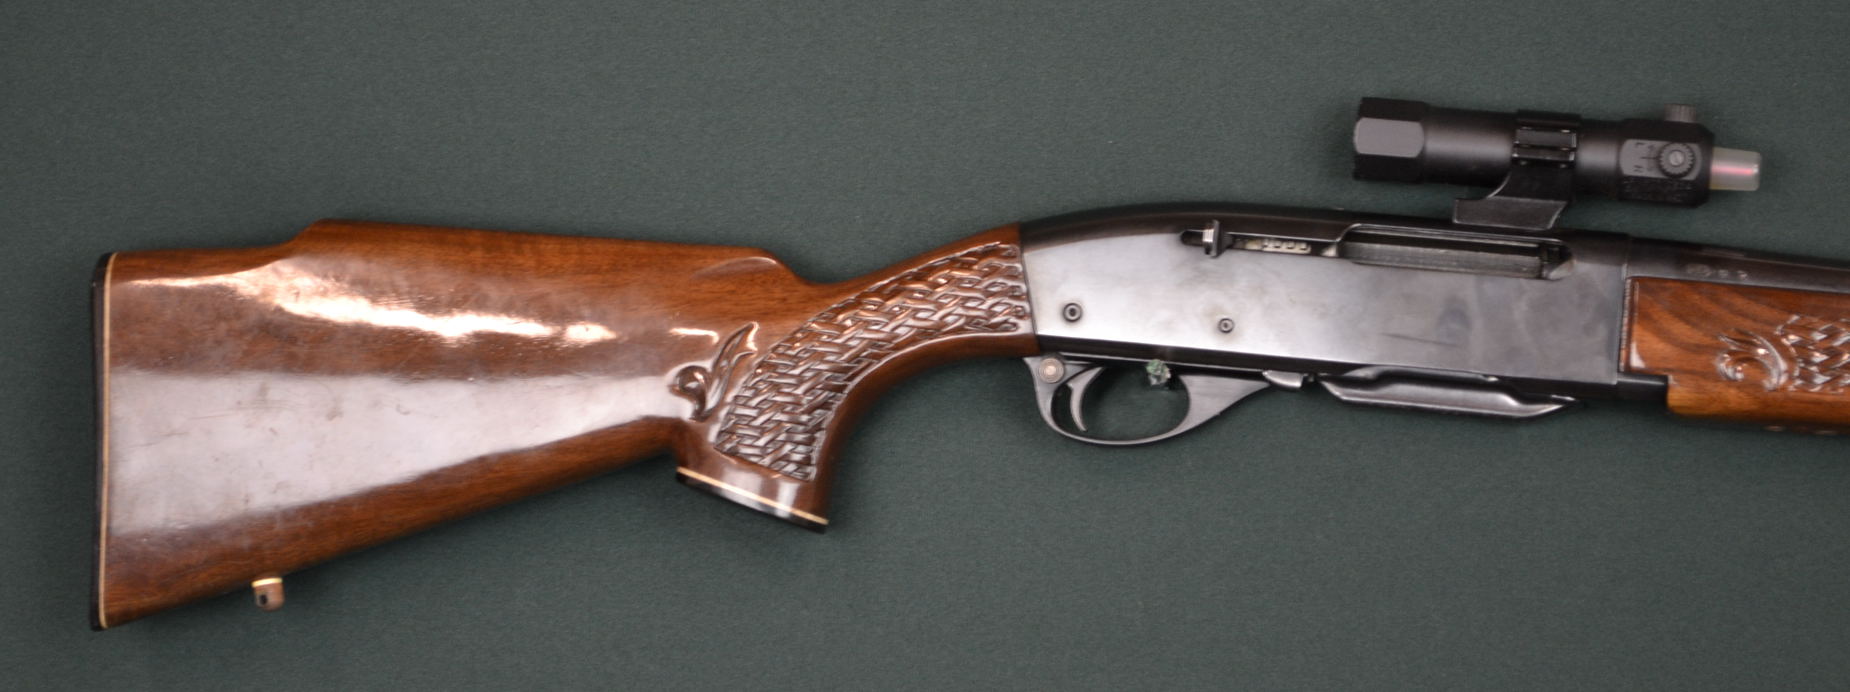 Remington Woodsmaster 742 30 06 Sprg Semi Auto Rifle For Sale At